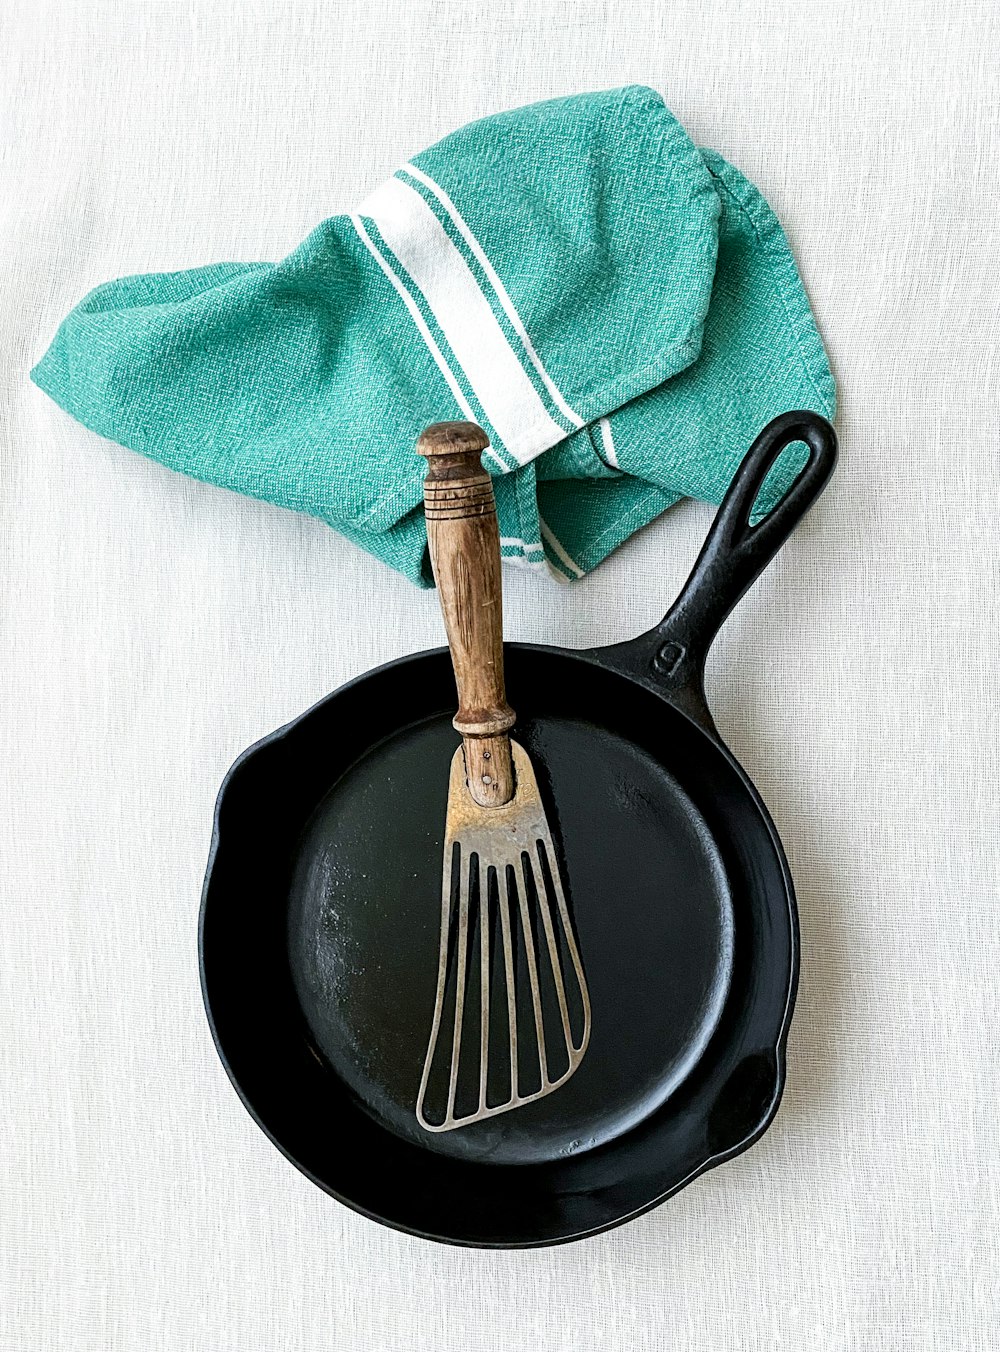 brown handle fork on black round plate